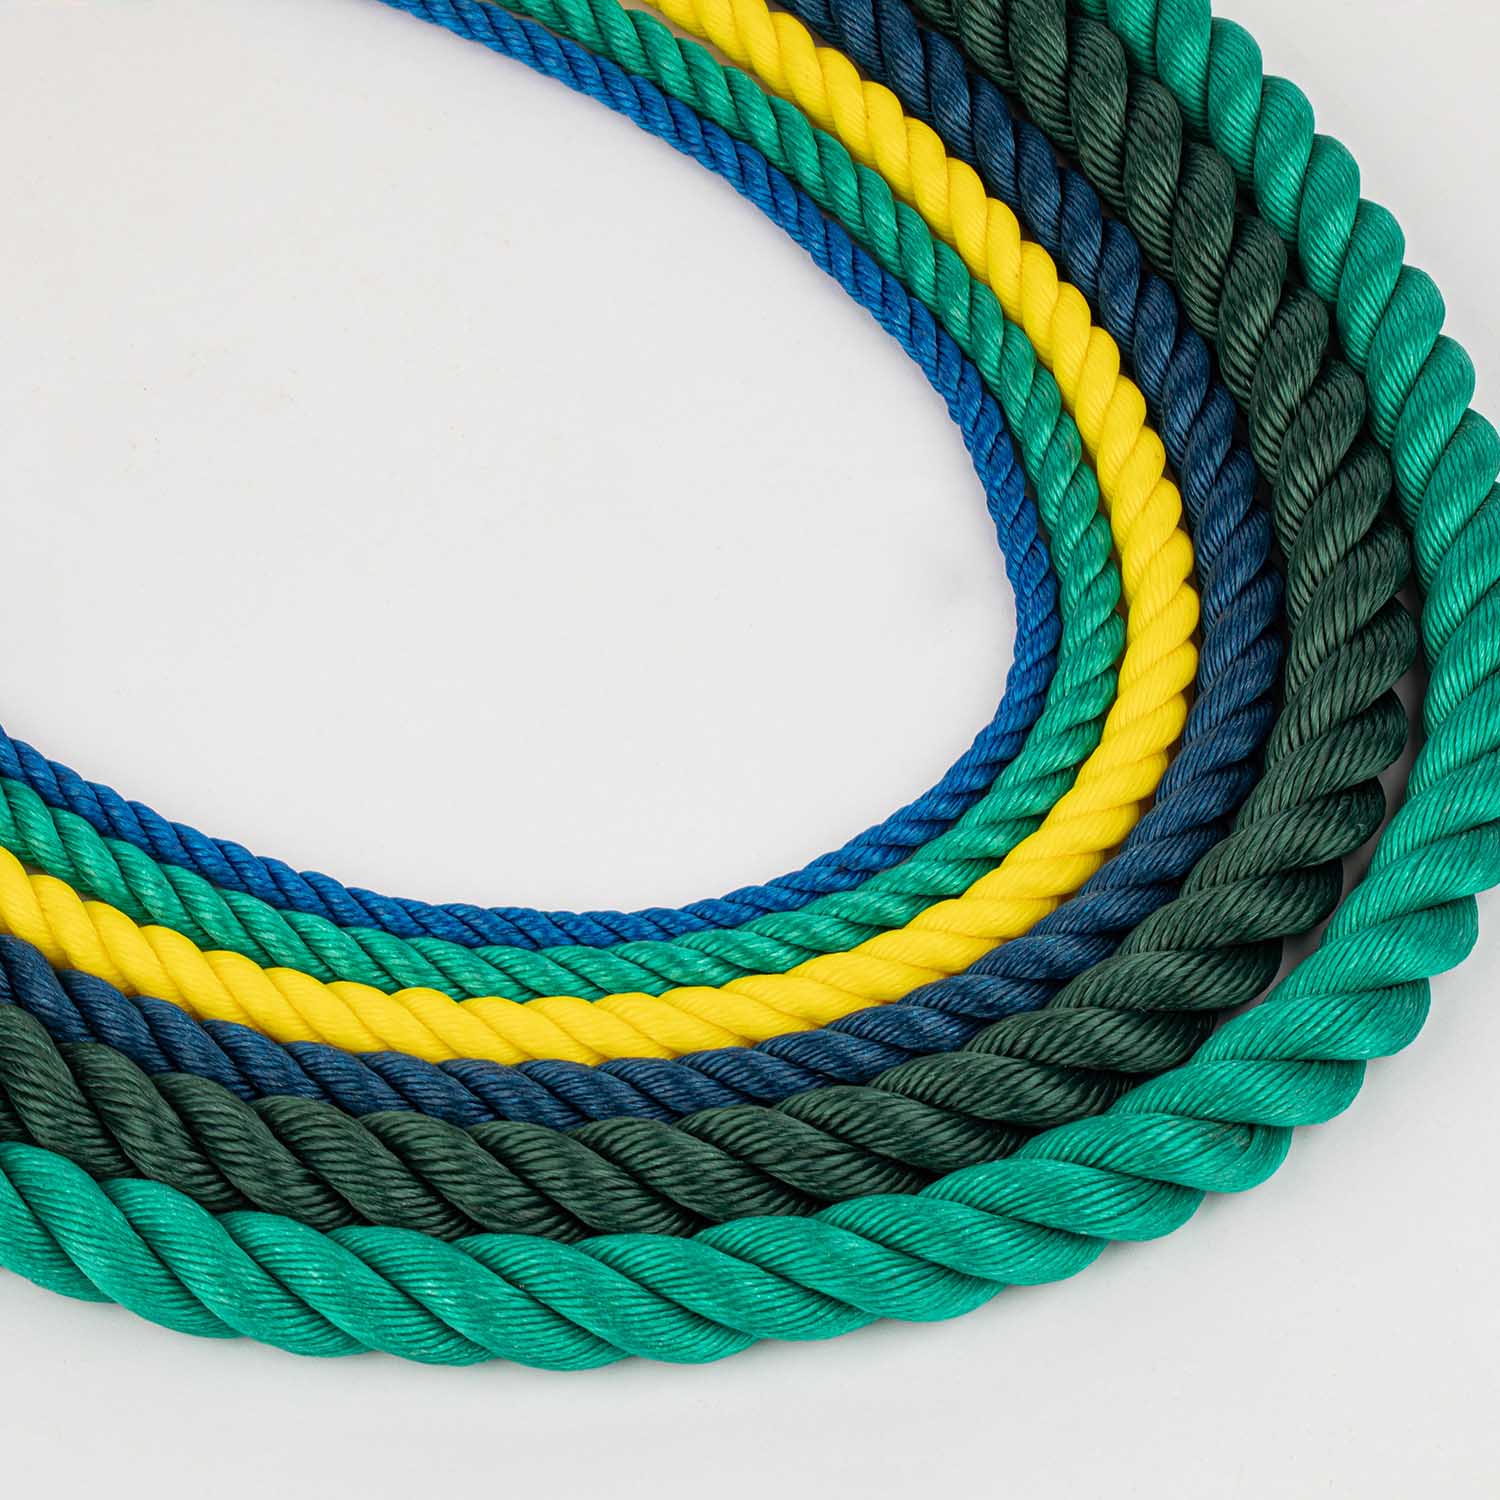 25mm 3 Strands Polypropylene Rope Buy Polysteel, Fishing Line, Mooring Line Product on Hailun